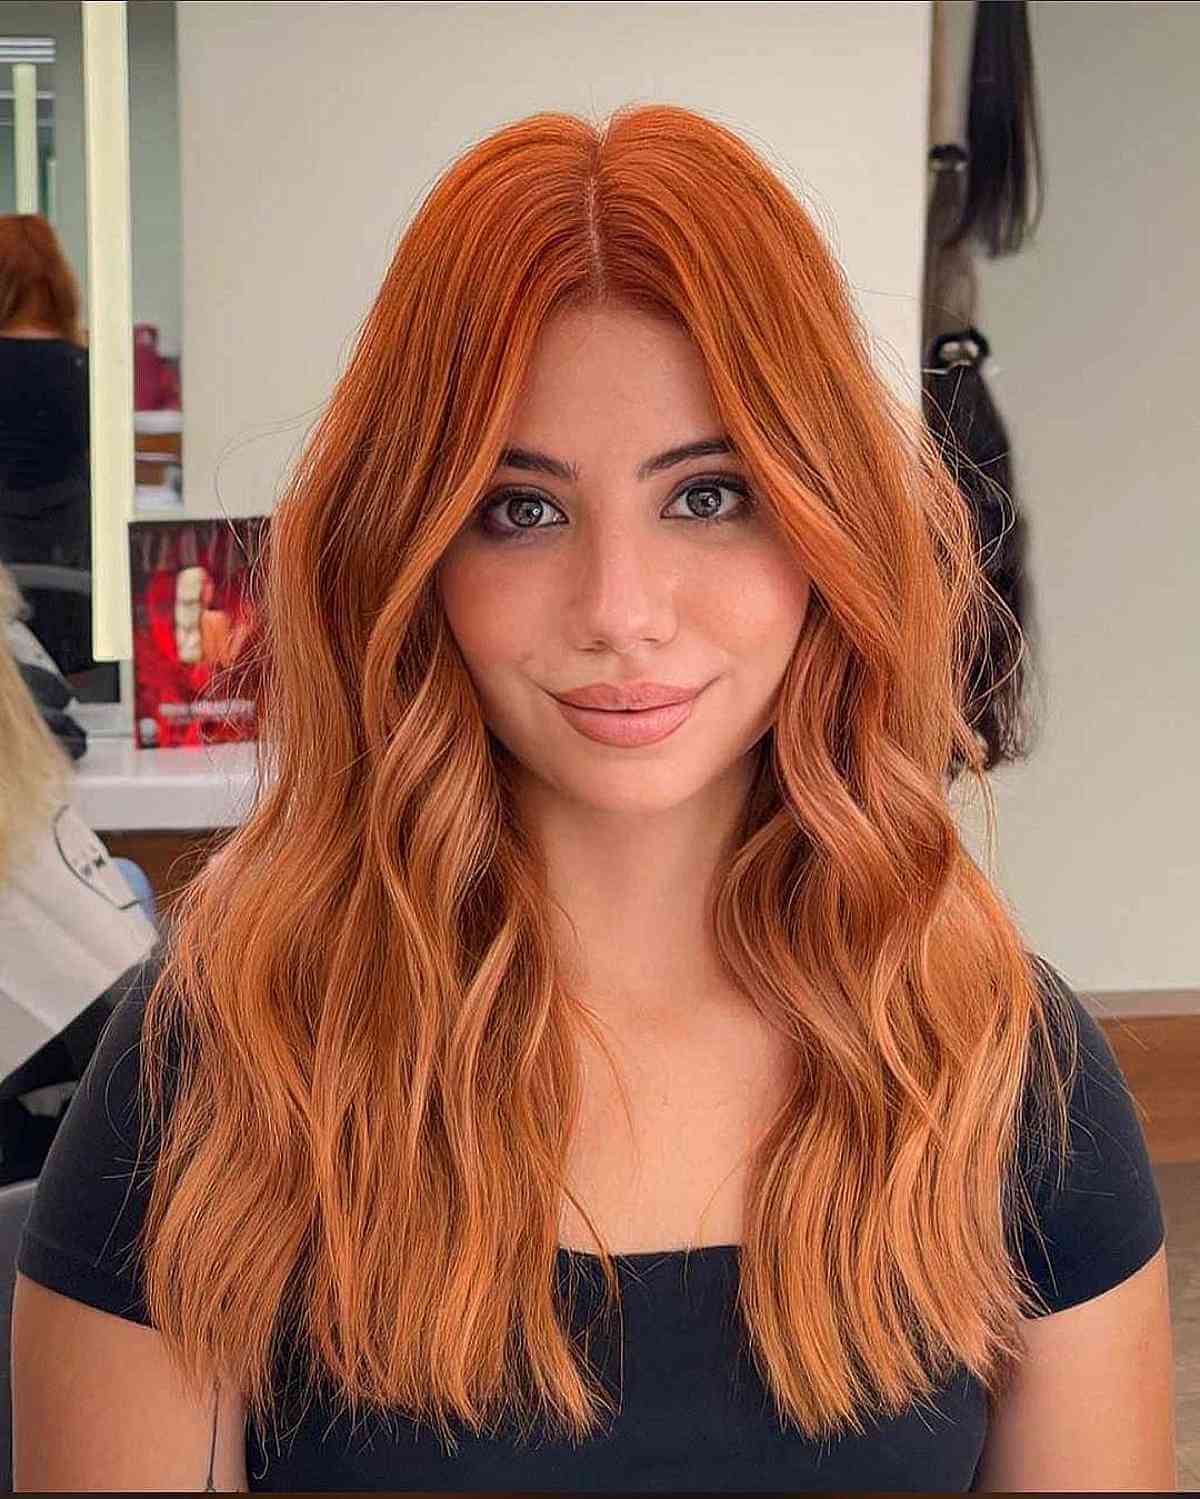 Bold Medium-Length Copper Hair Color